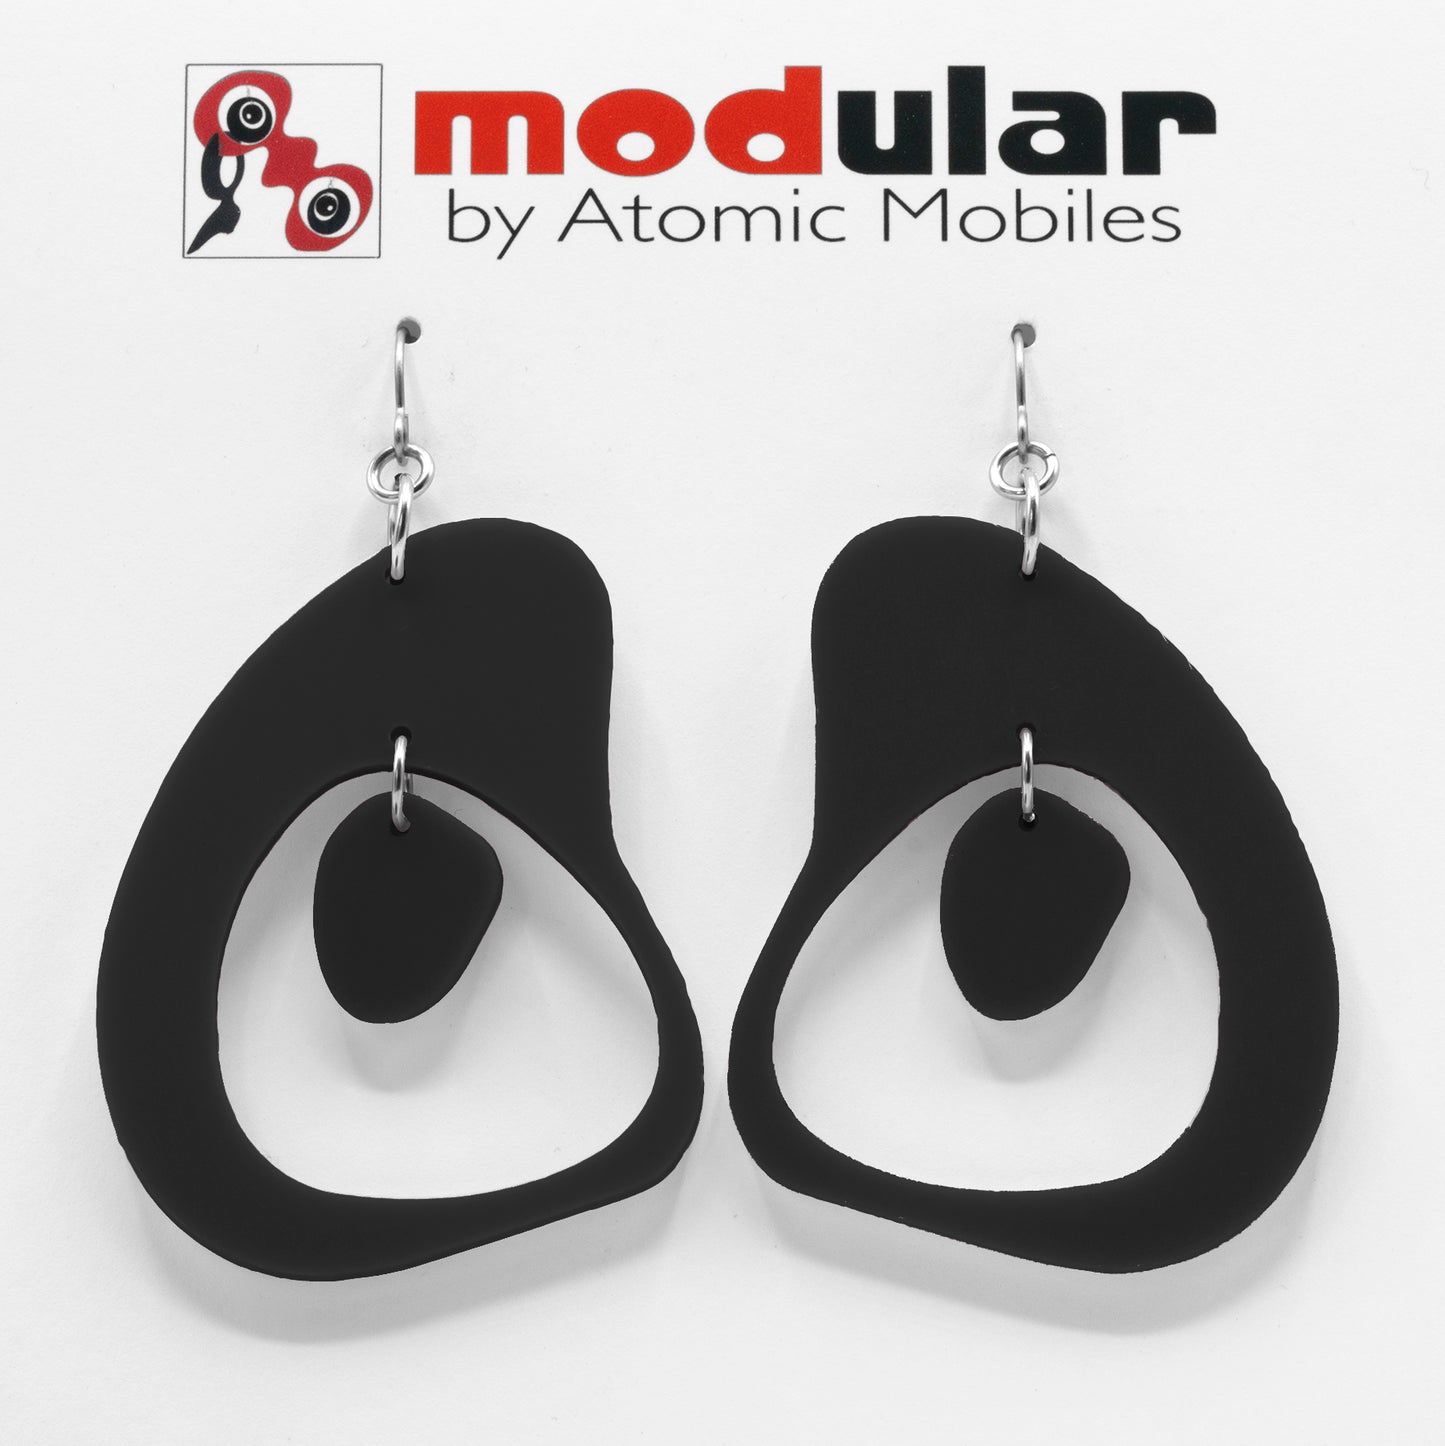 MODular Earrings - Boomerang Statement Earrings in Black by AtomicMobiles.com - retro era inspired mod handmade jewelry